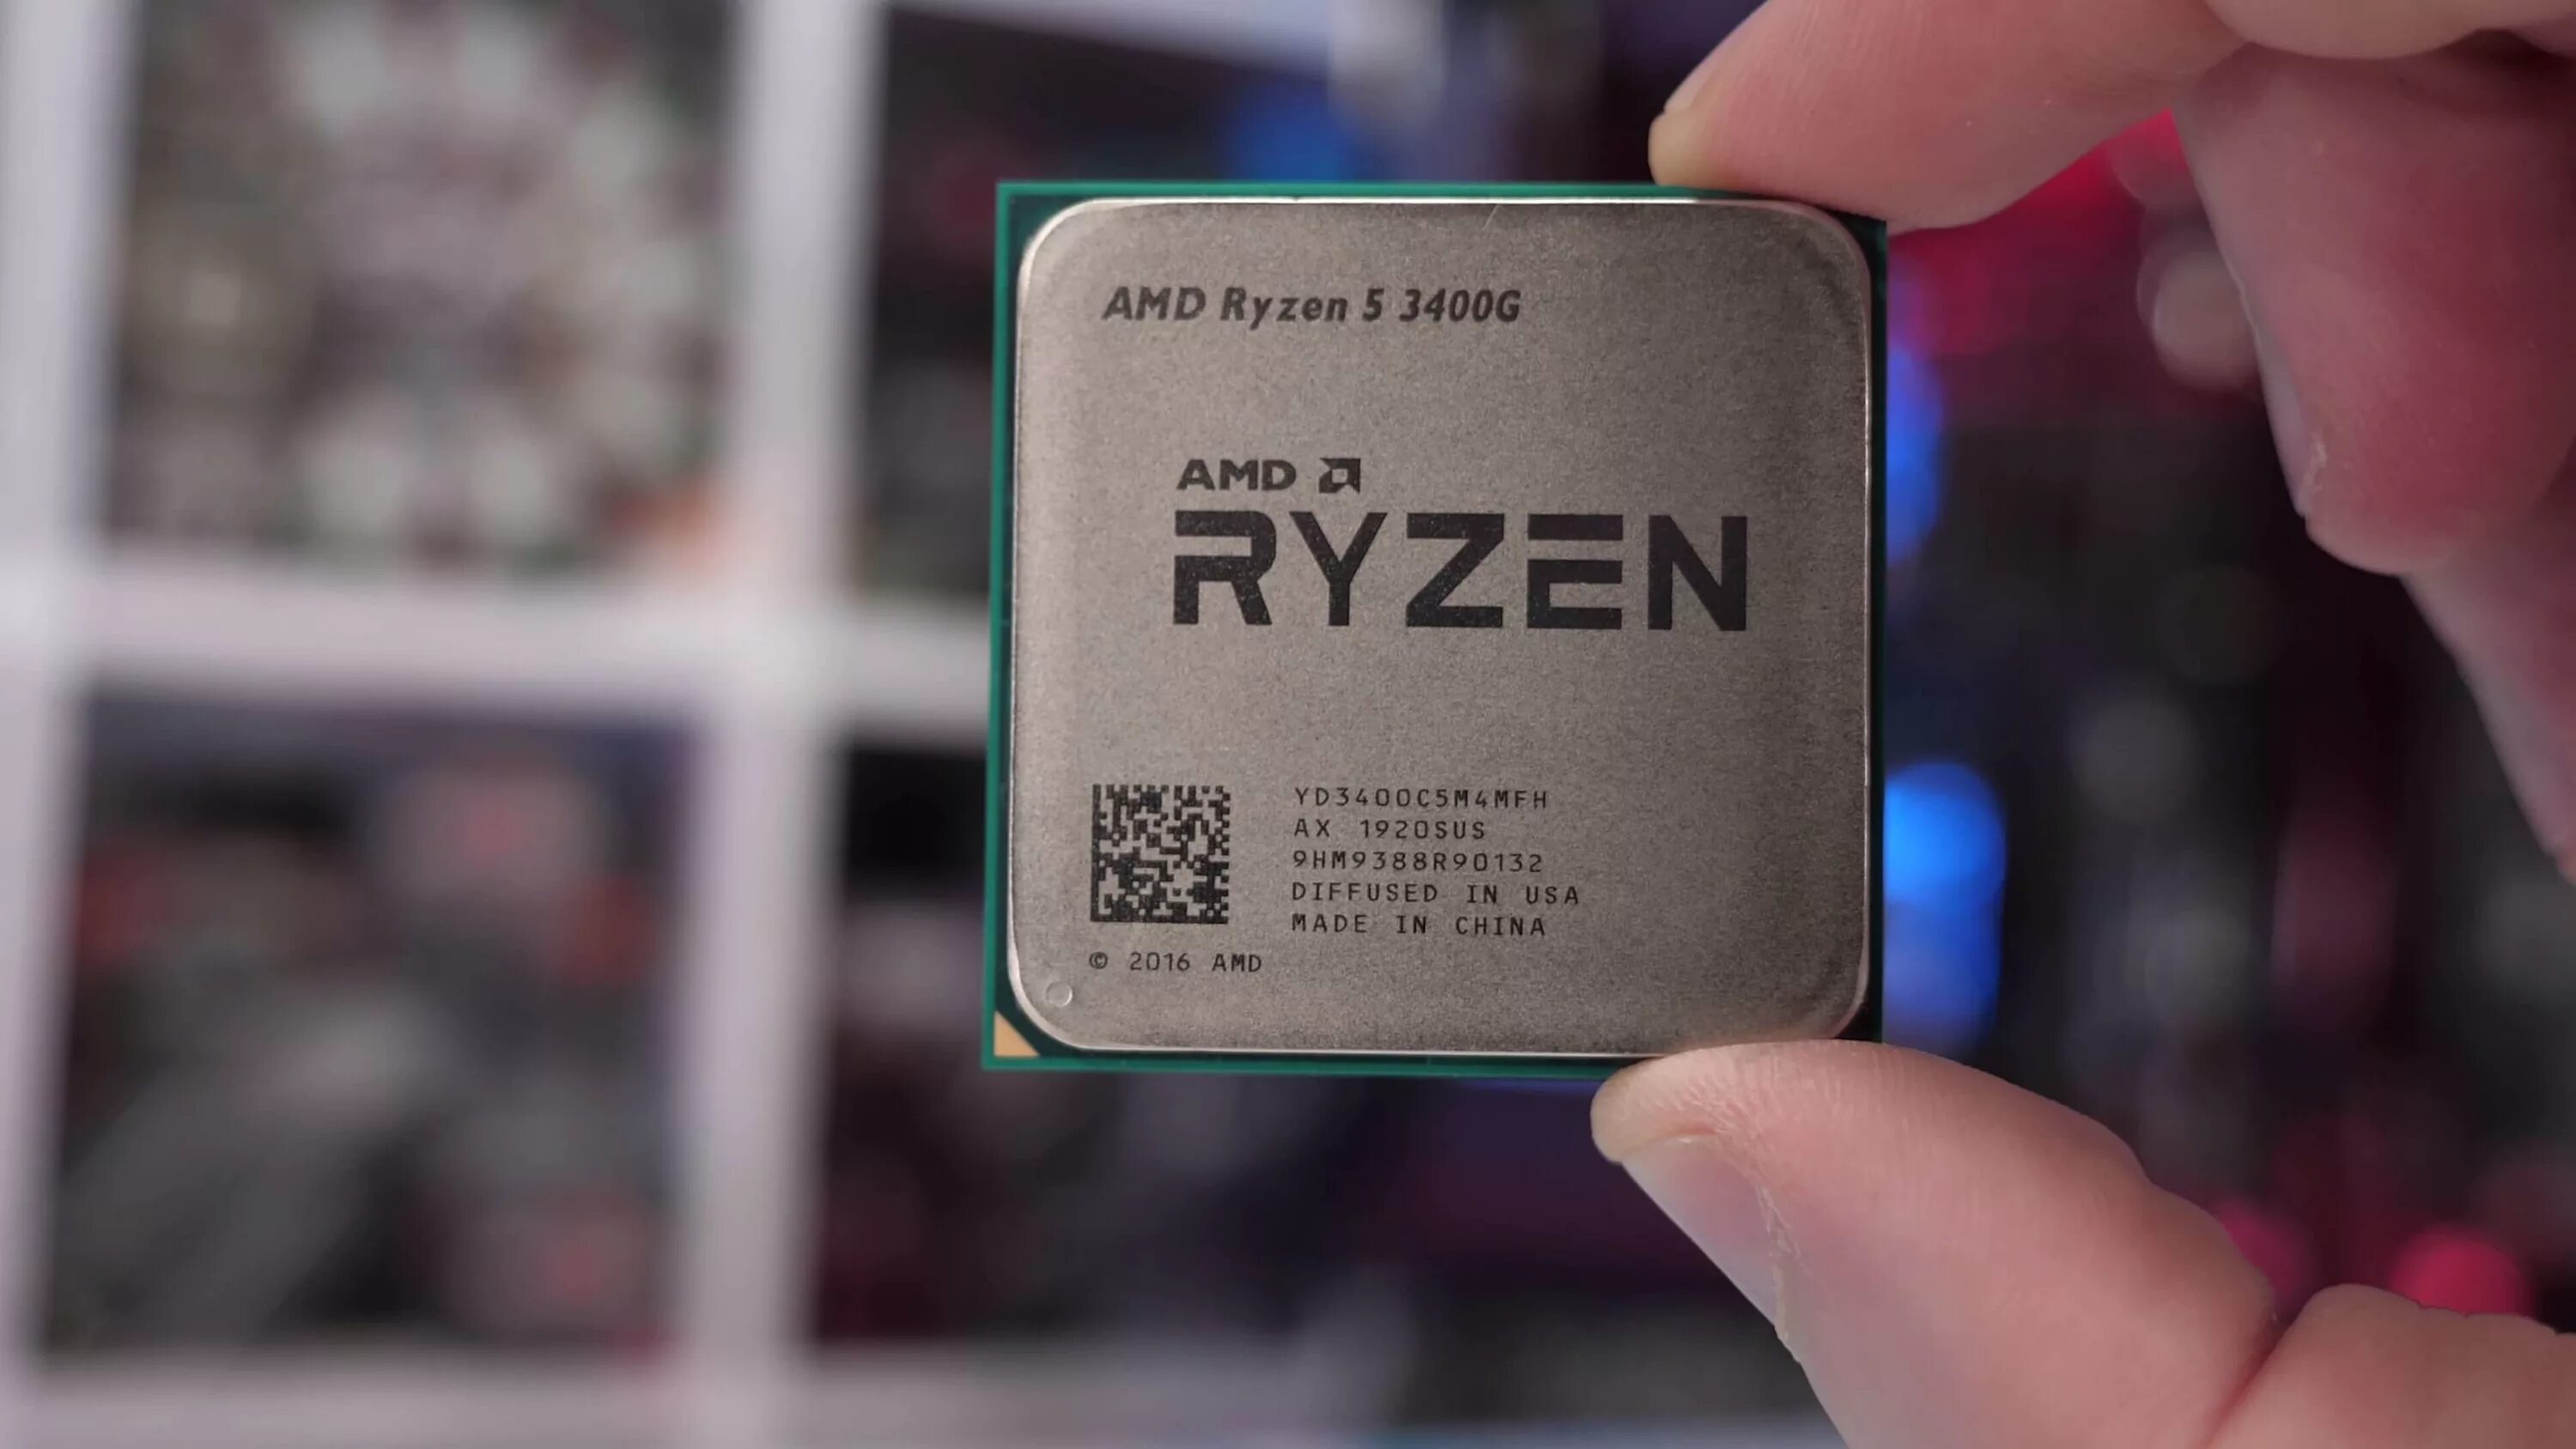 5 3400g купить. Ryzen 5 3400g. Процессор AMD Ryzen 5 3400g. Процессор AMD Ryzen 5 Pro 2400g. Ryzen r5 5600g.